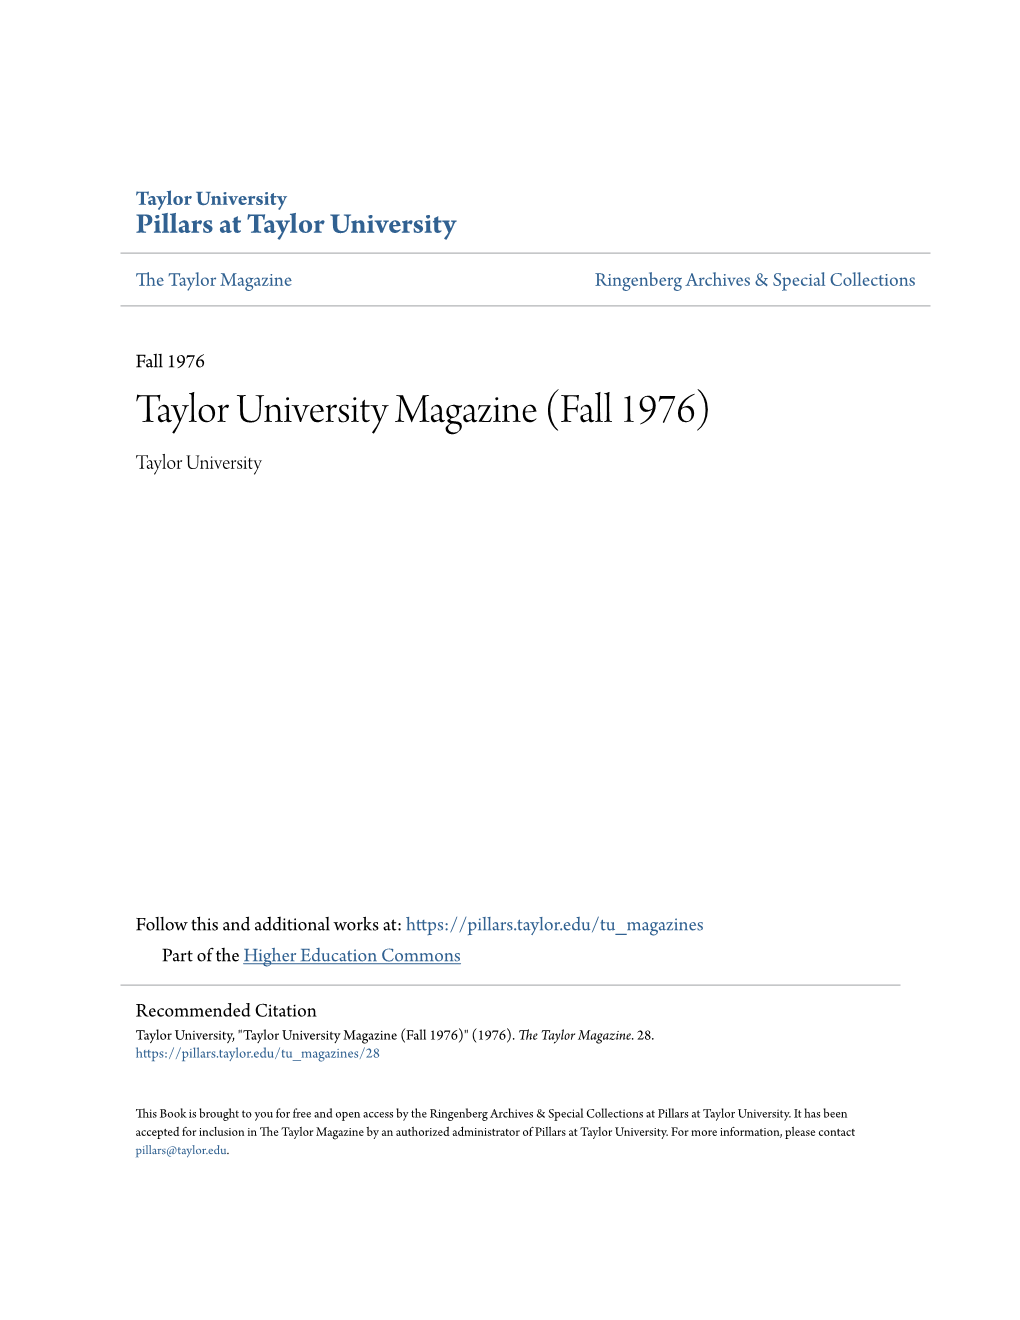 Taylor University Magazine (Fall 1976) Taylor University